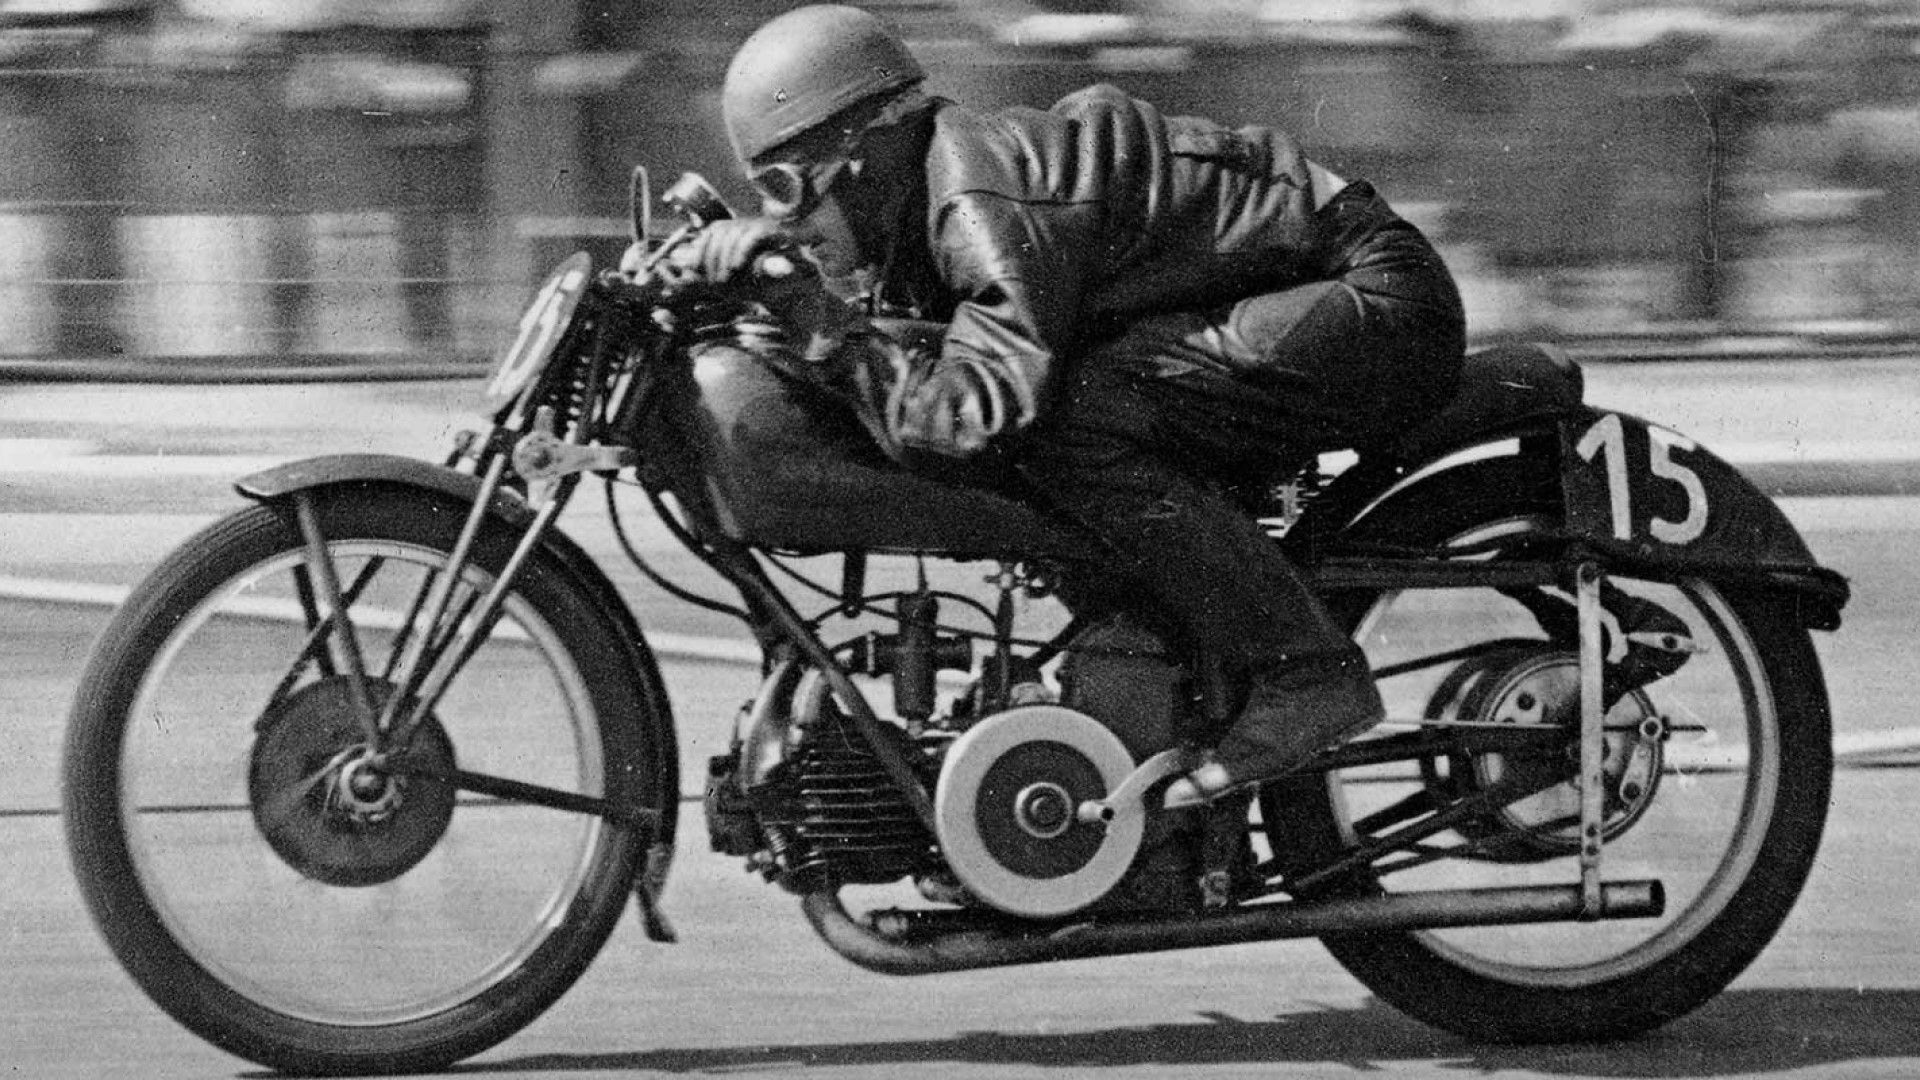 Vintage Moto Guzzi motorcycle racing side profile view